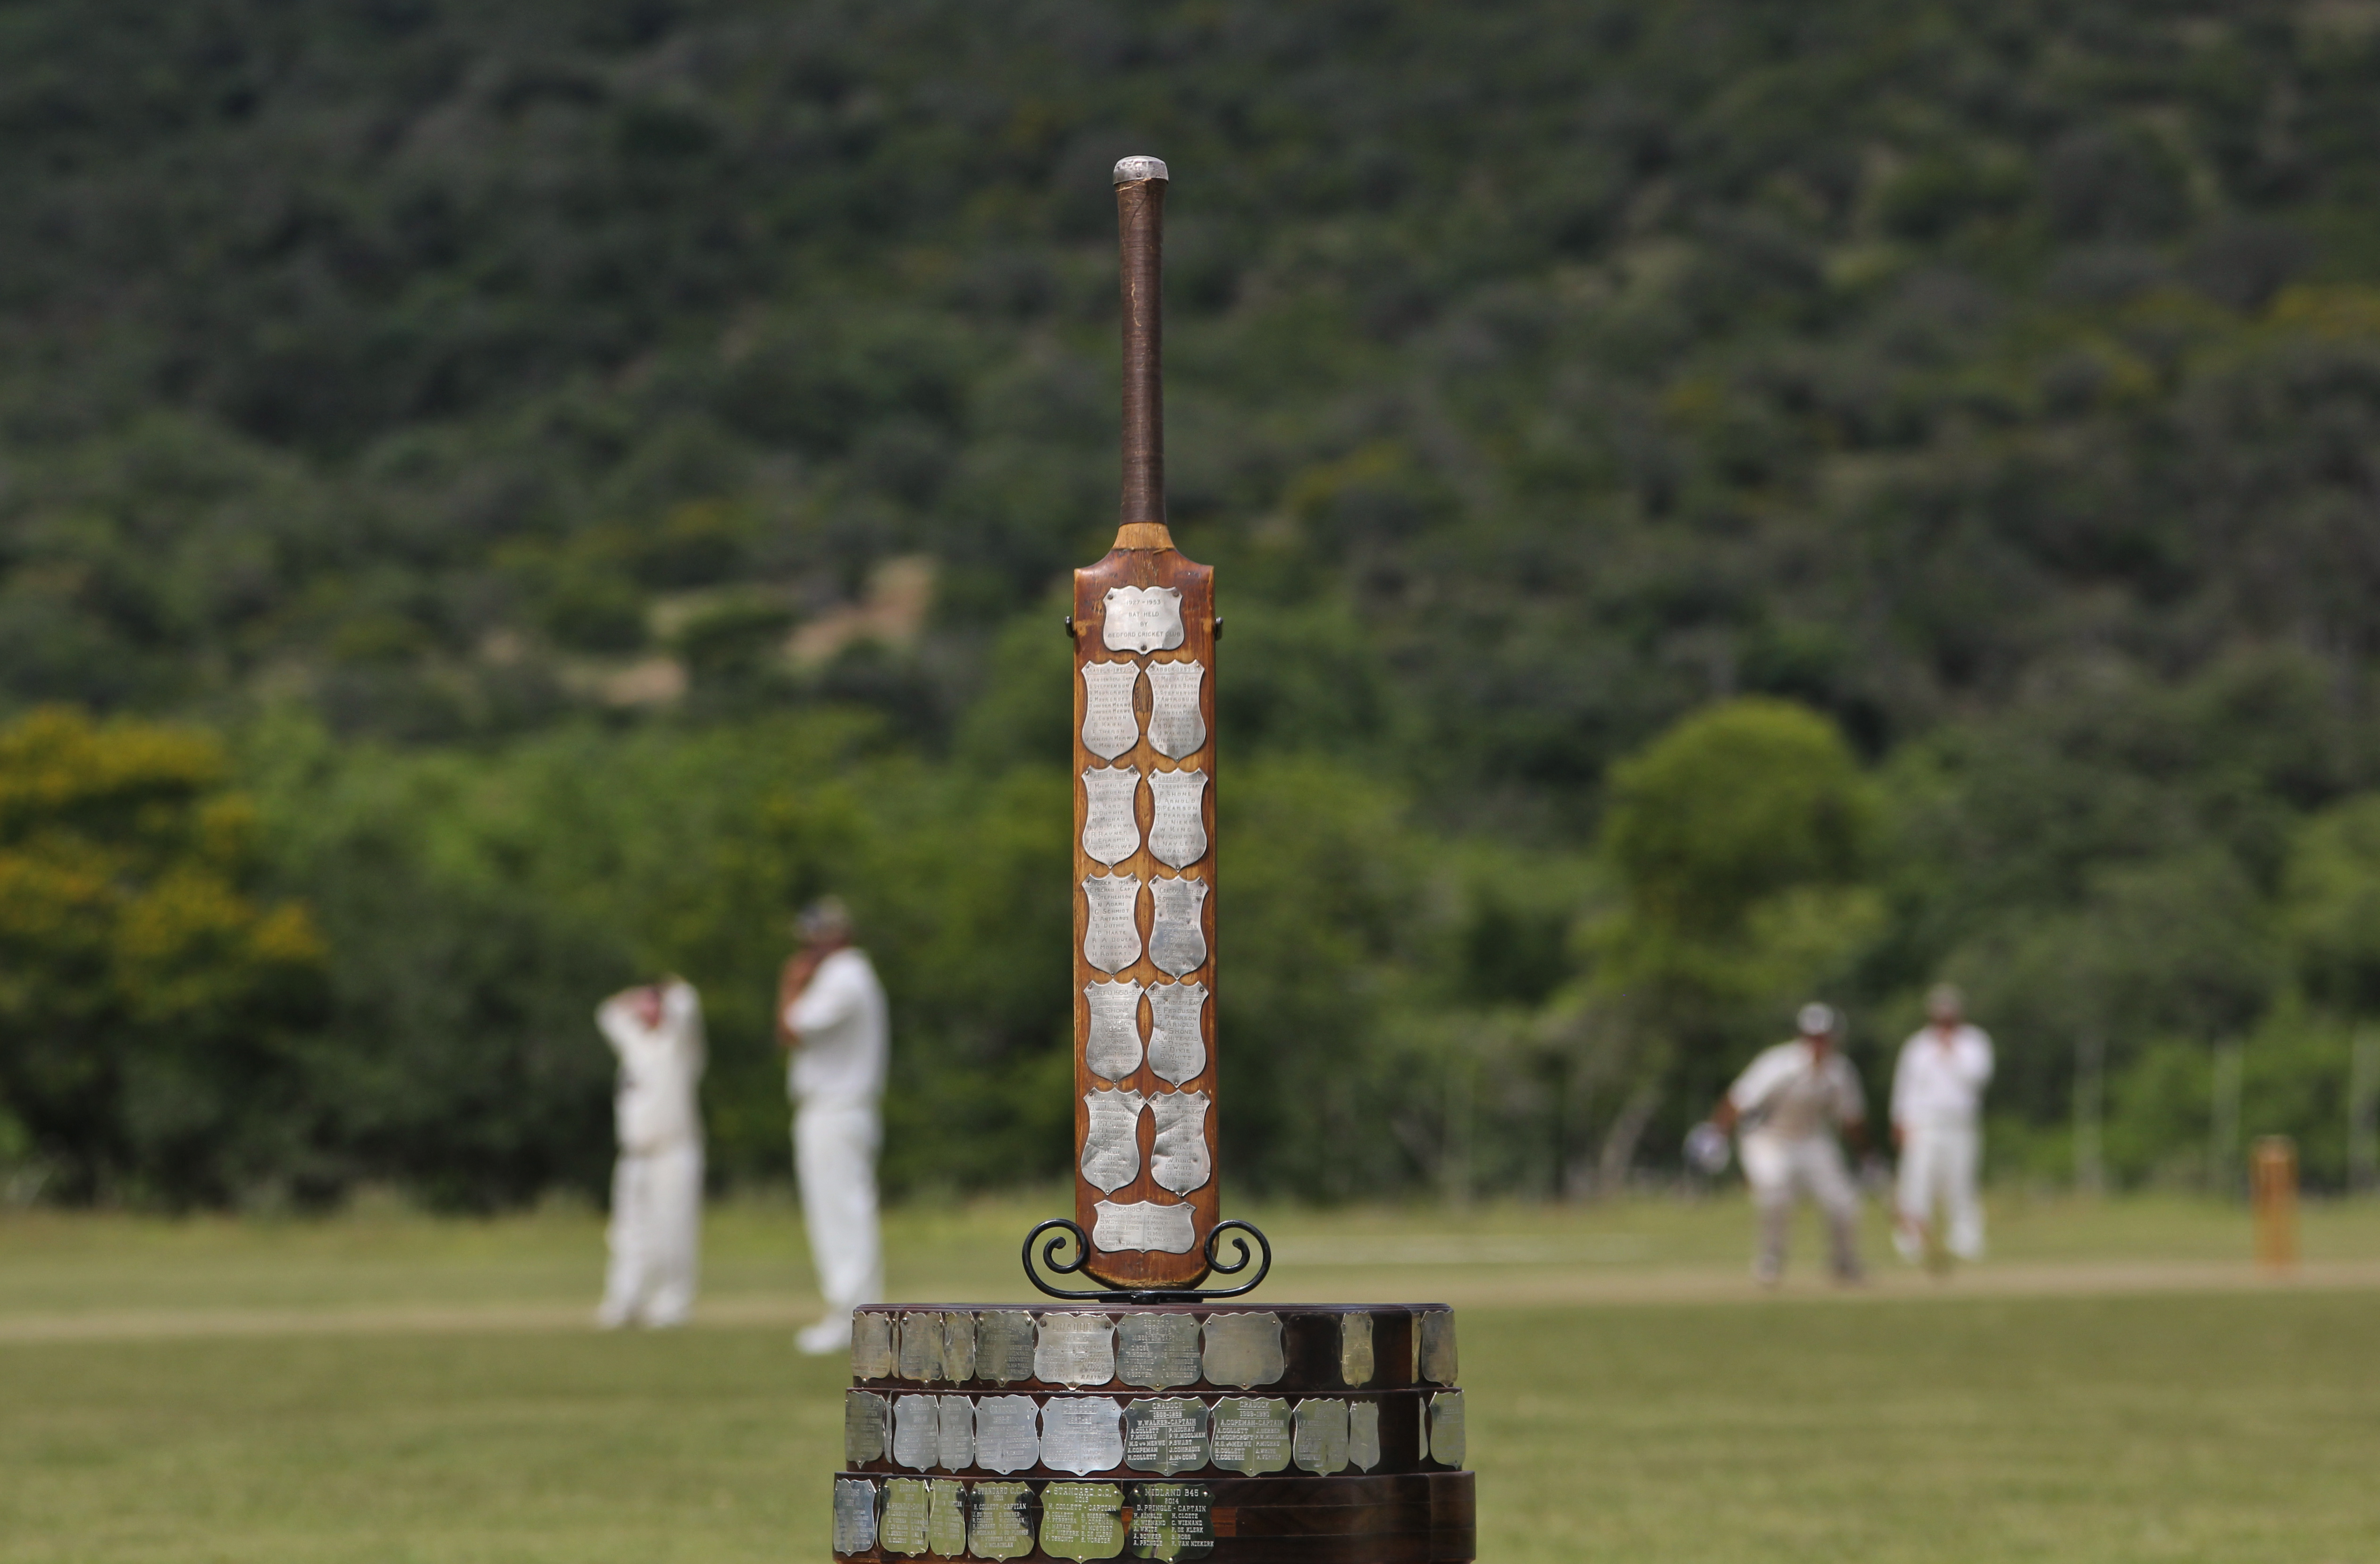 Karoo farm cricket